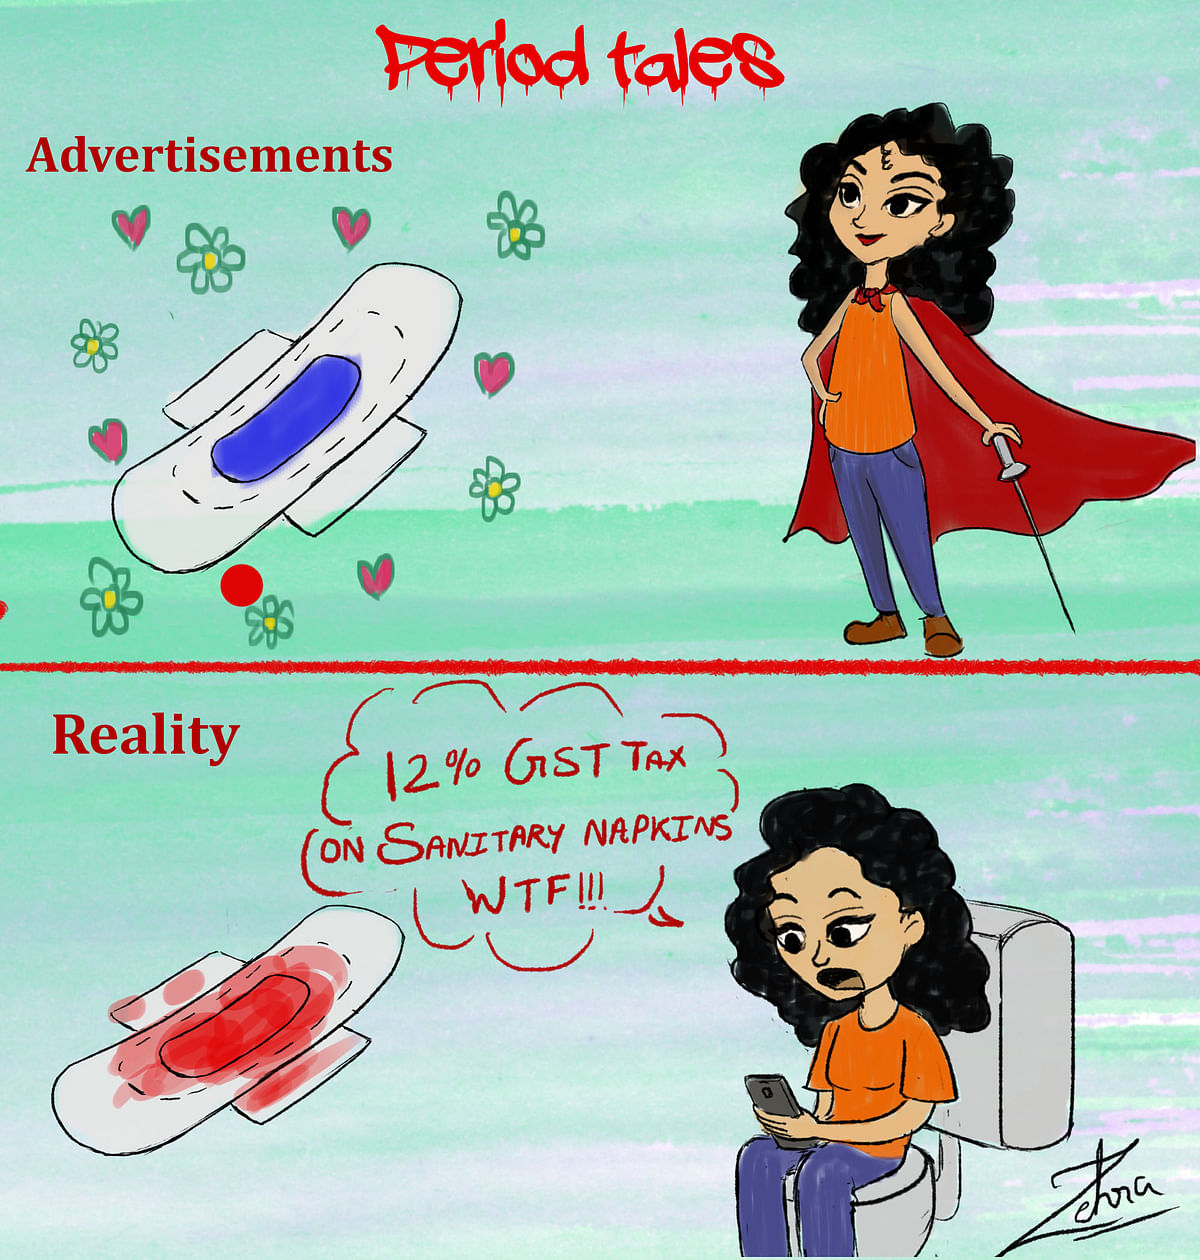 Advertisements vs Reality.